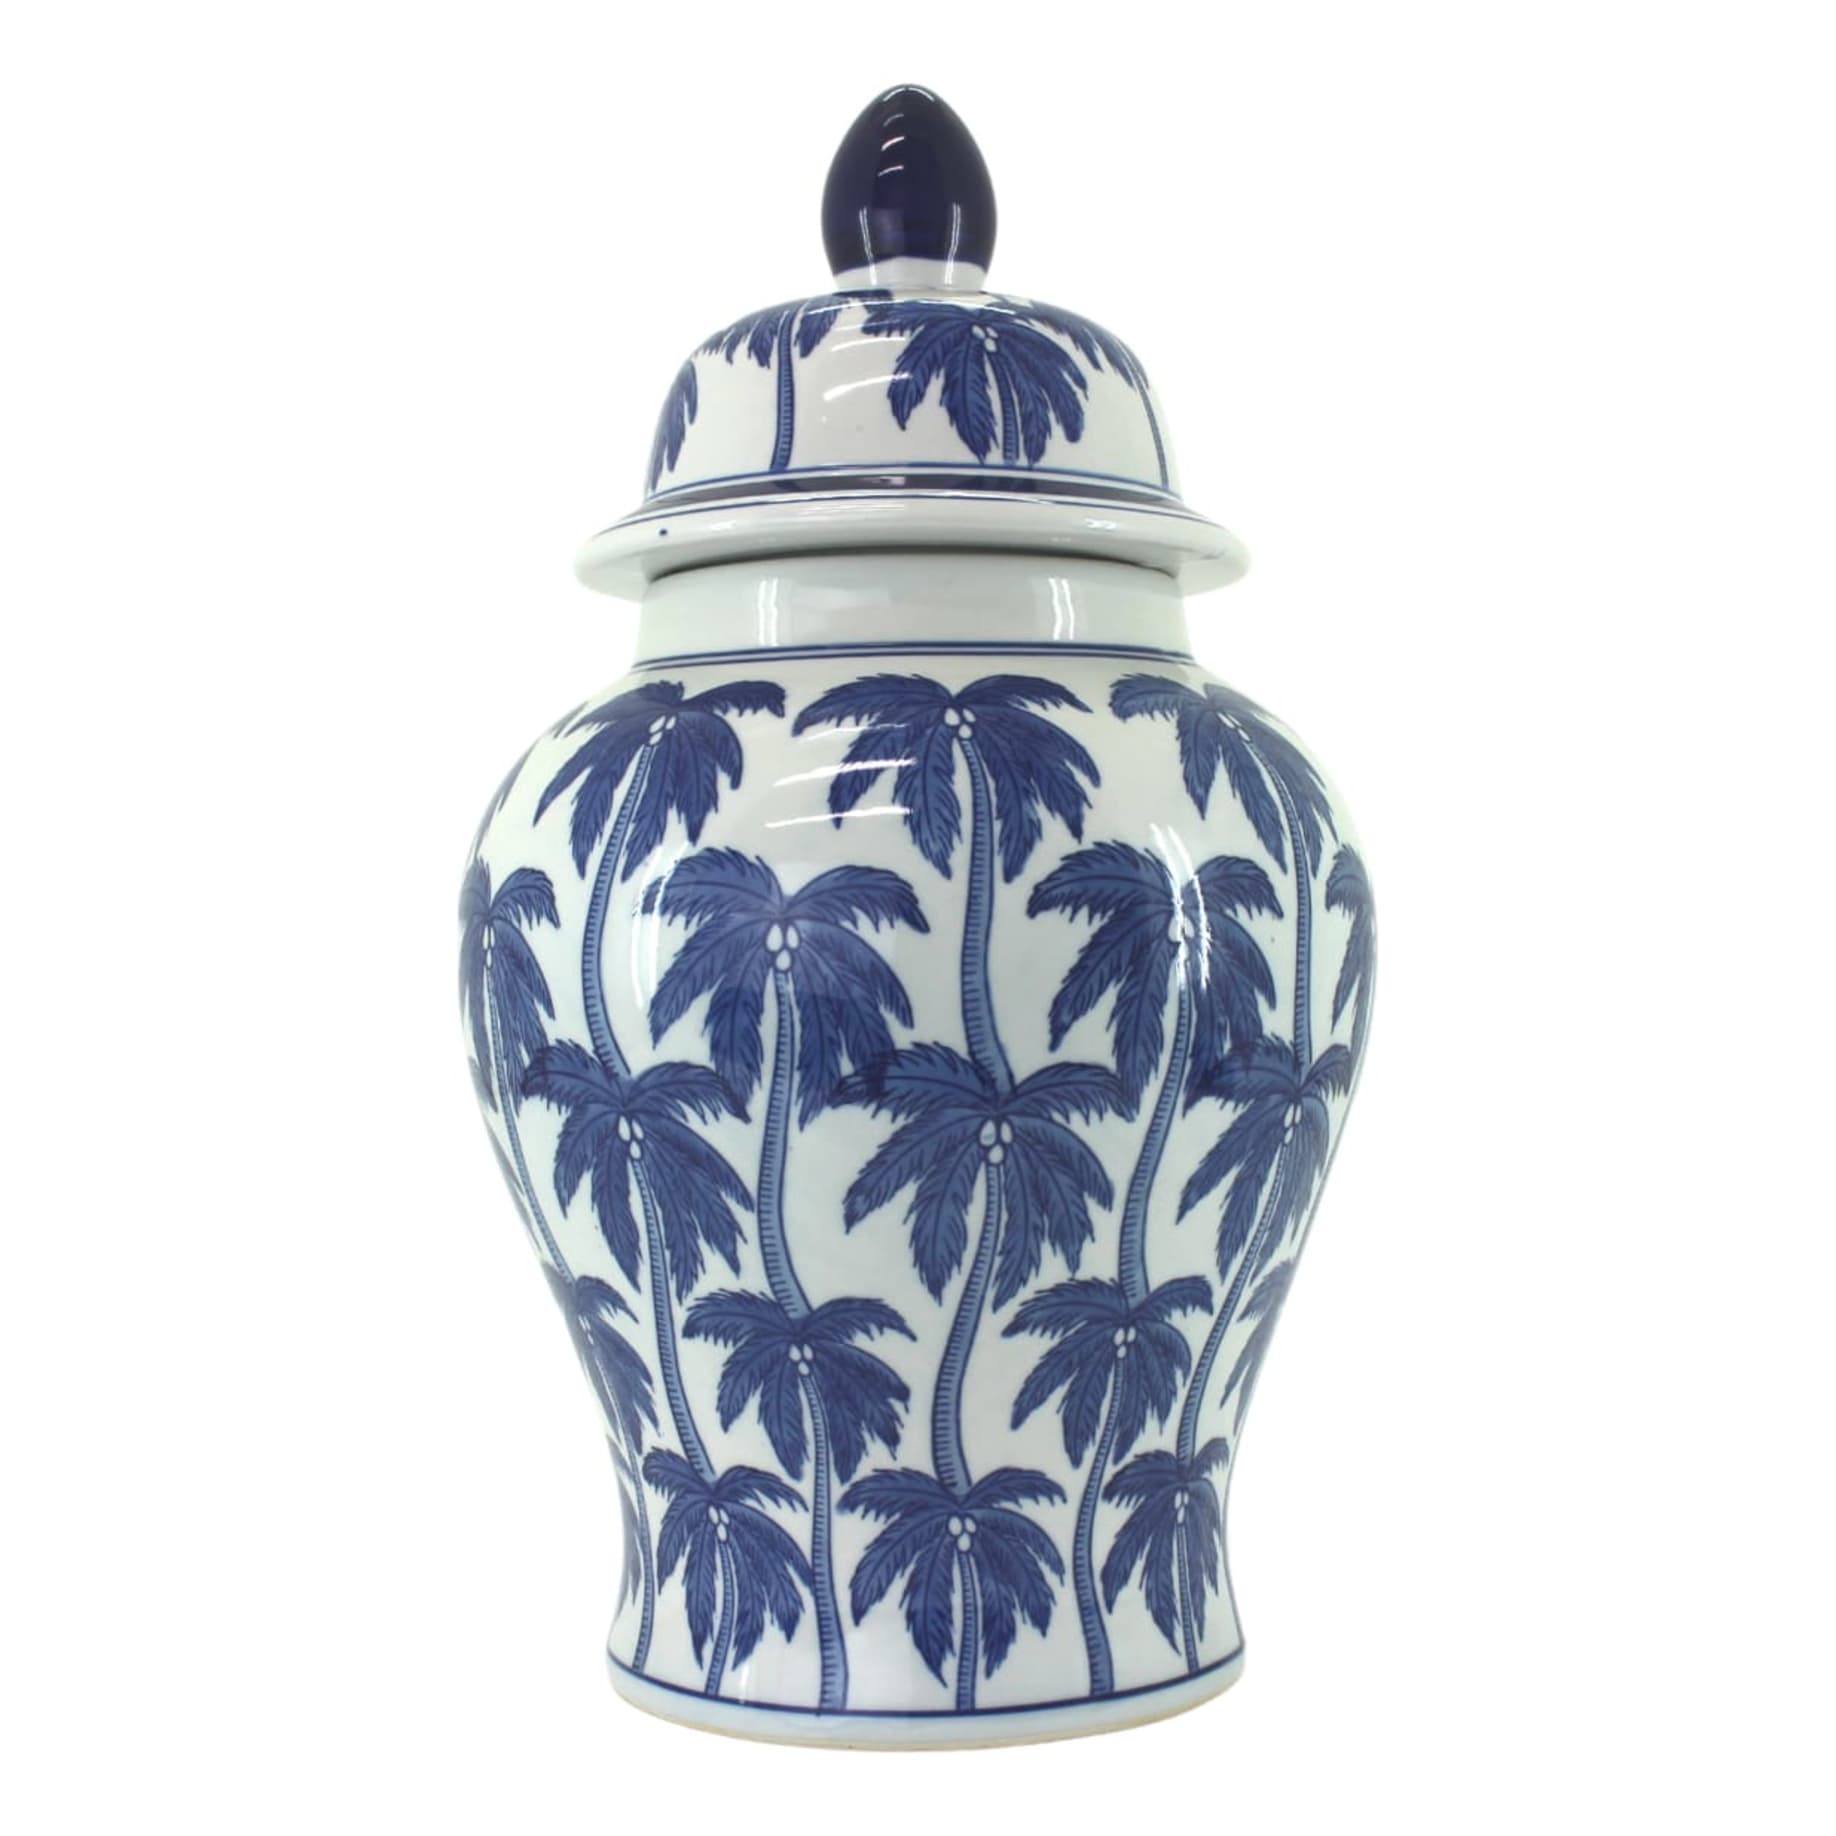 Keep Palm Ginger Jar 24.5x43cm in White/Blue